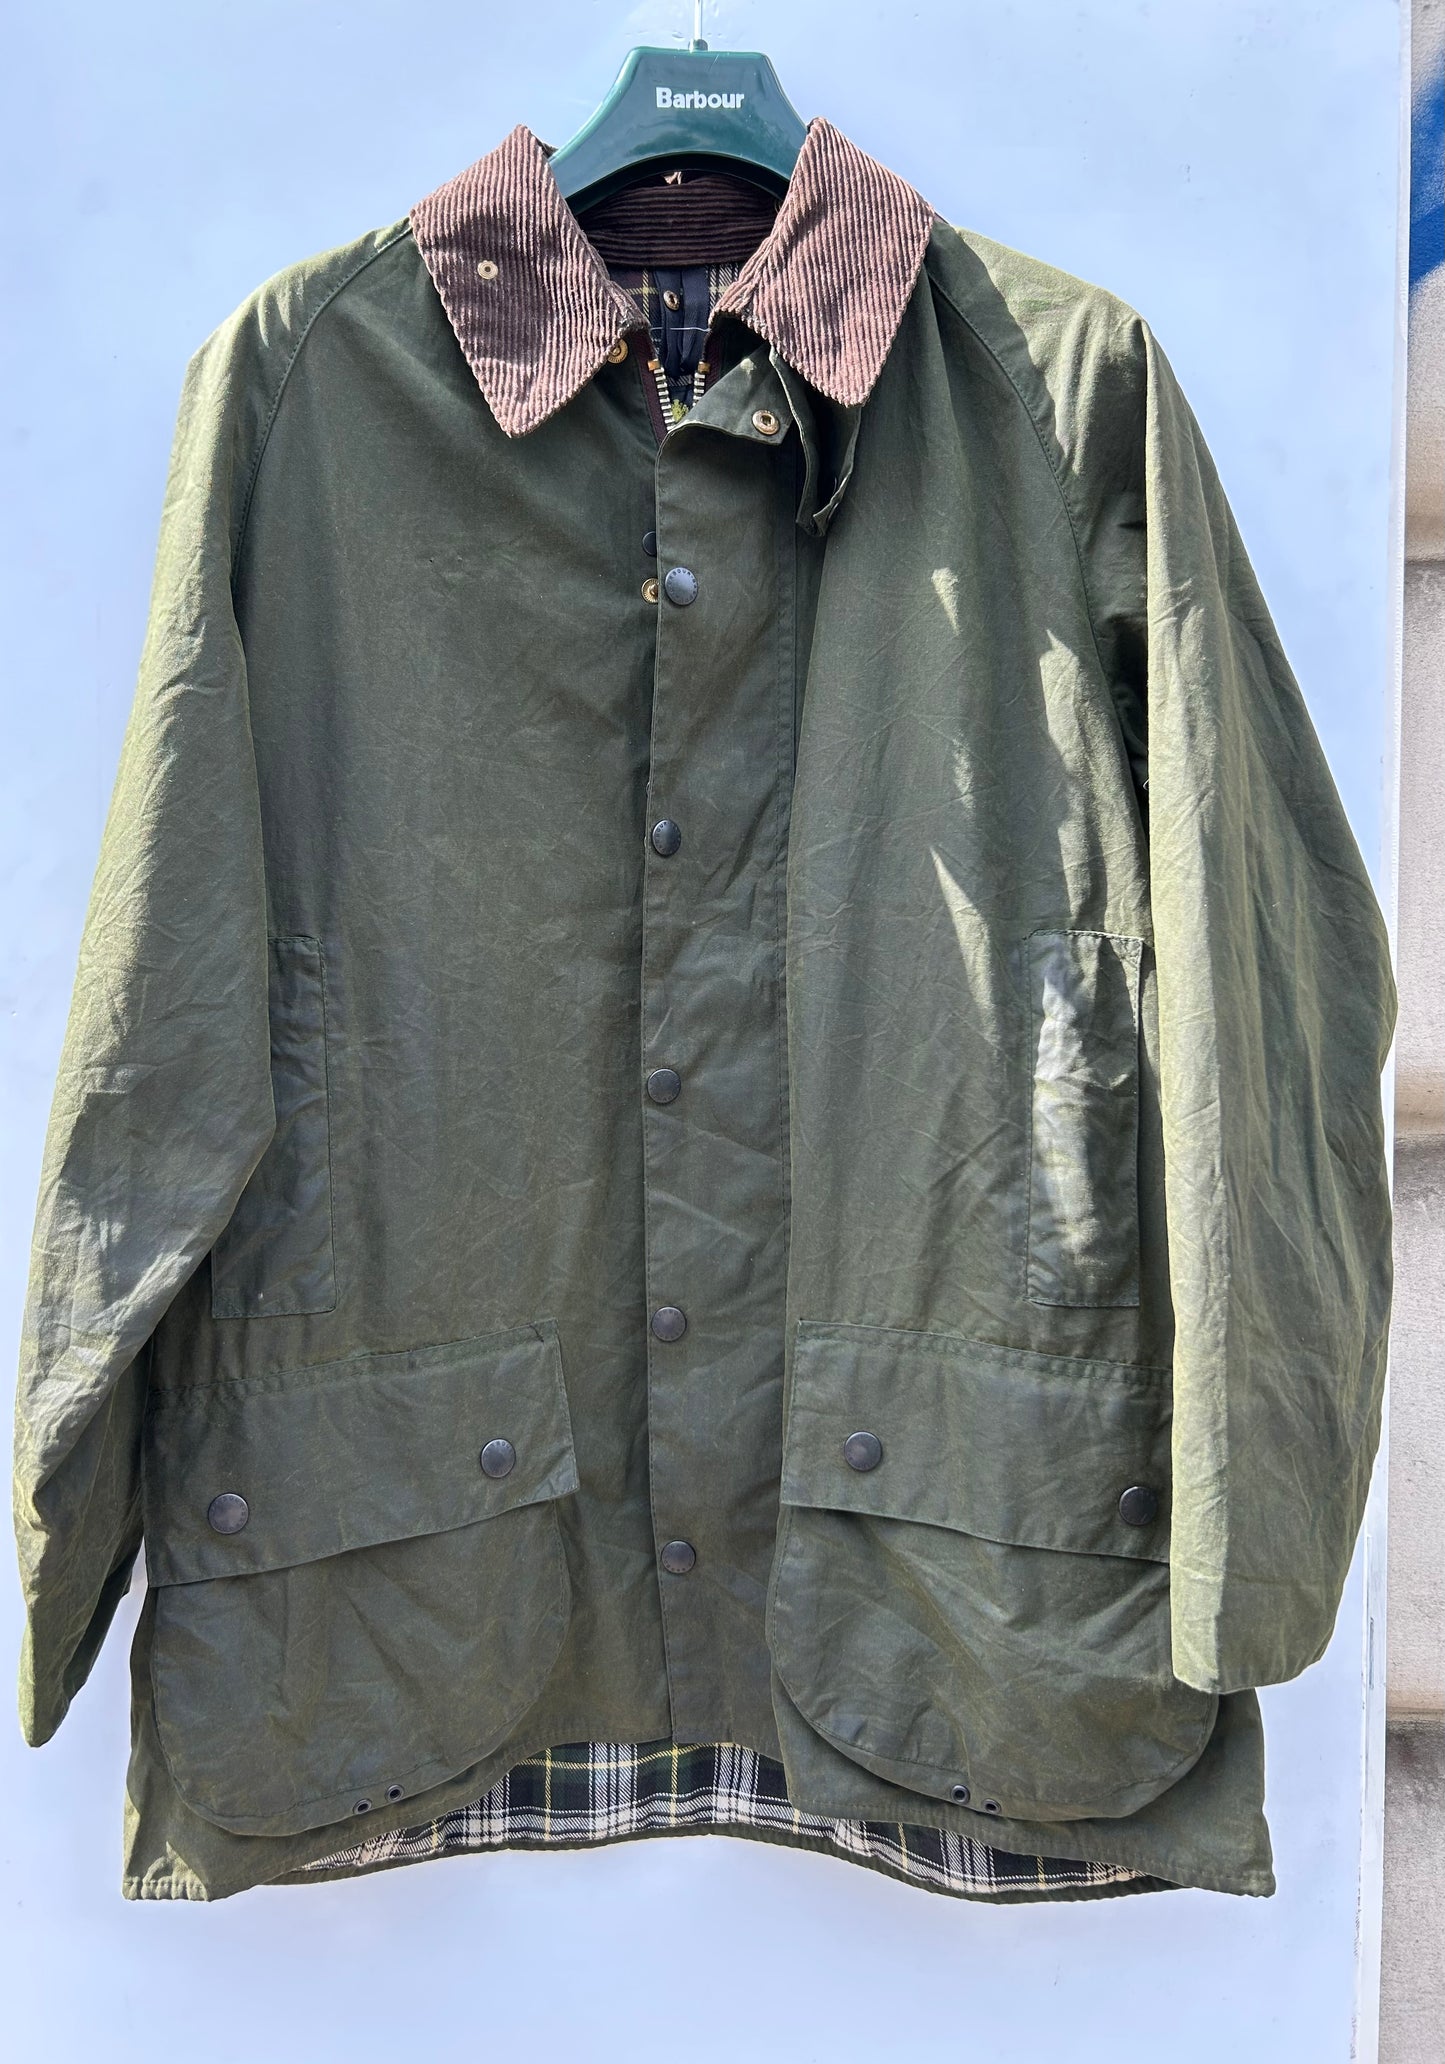 Barbour Beaufort Verde vintage c42/107 cm - Green Barbour Beaufort Jacket size c42